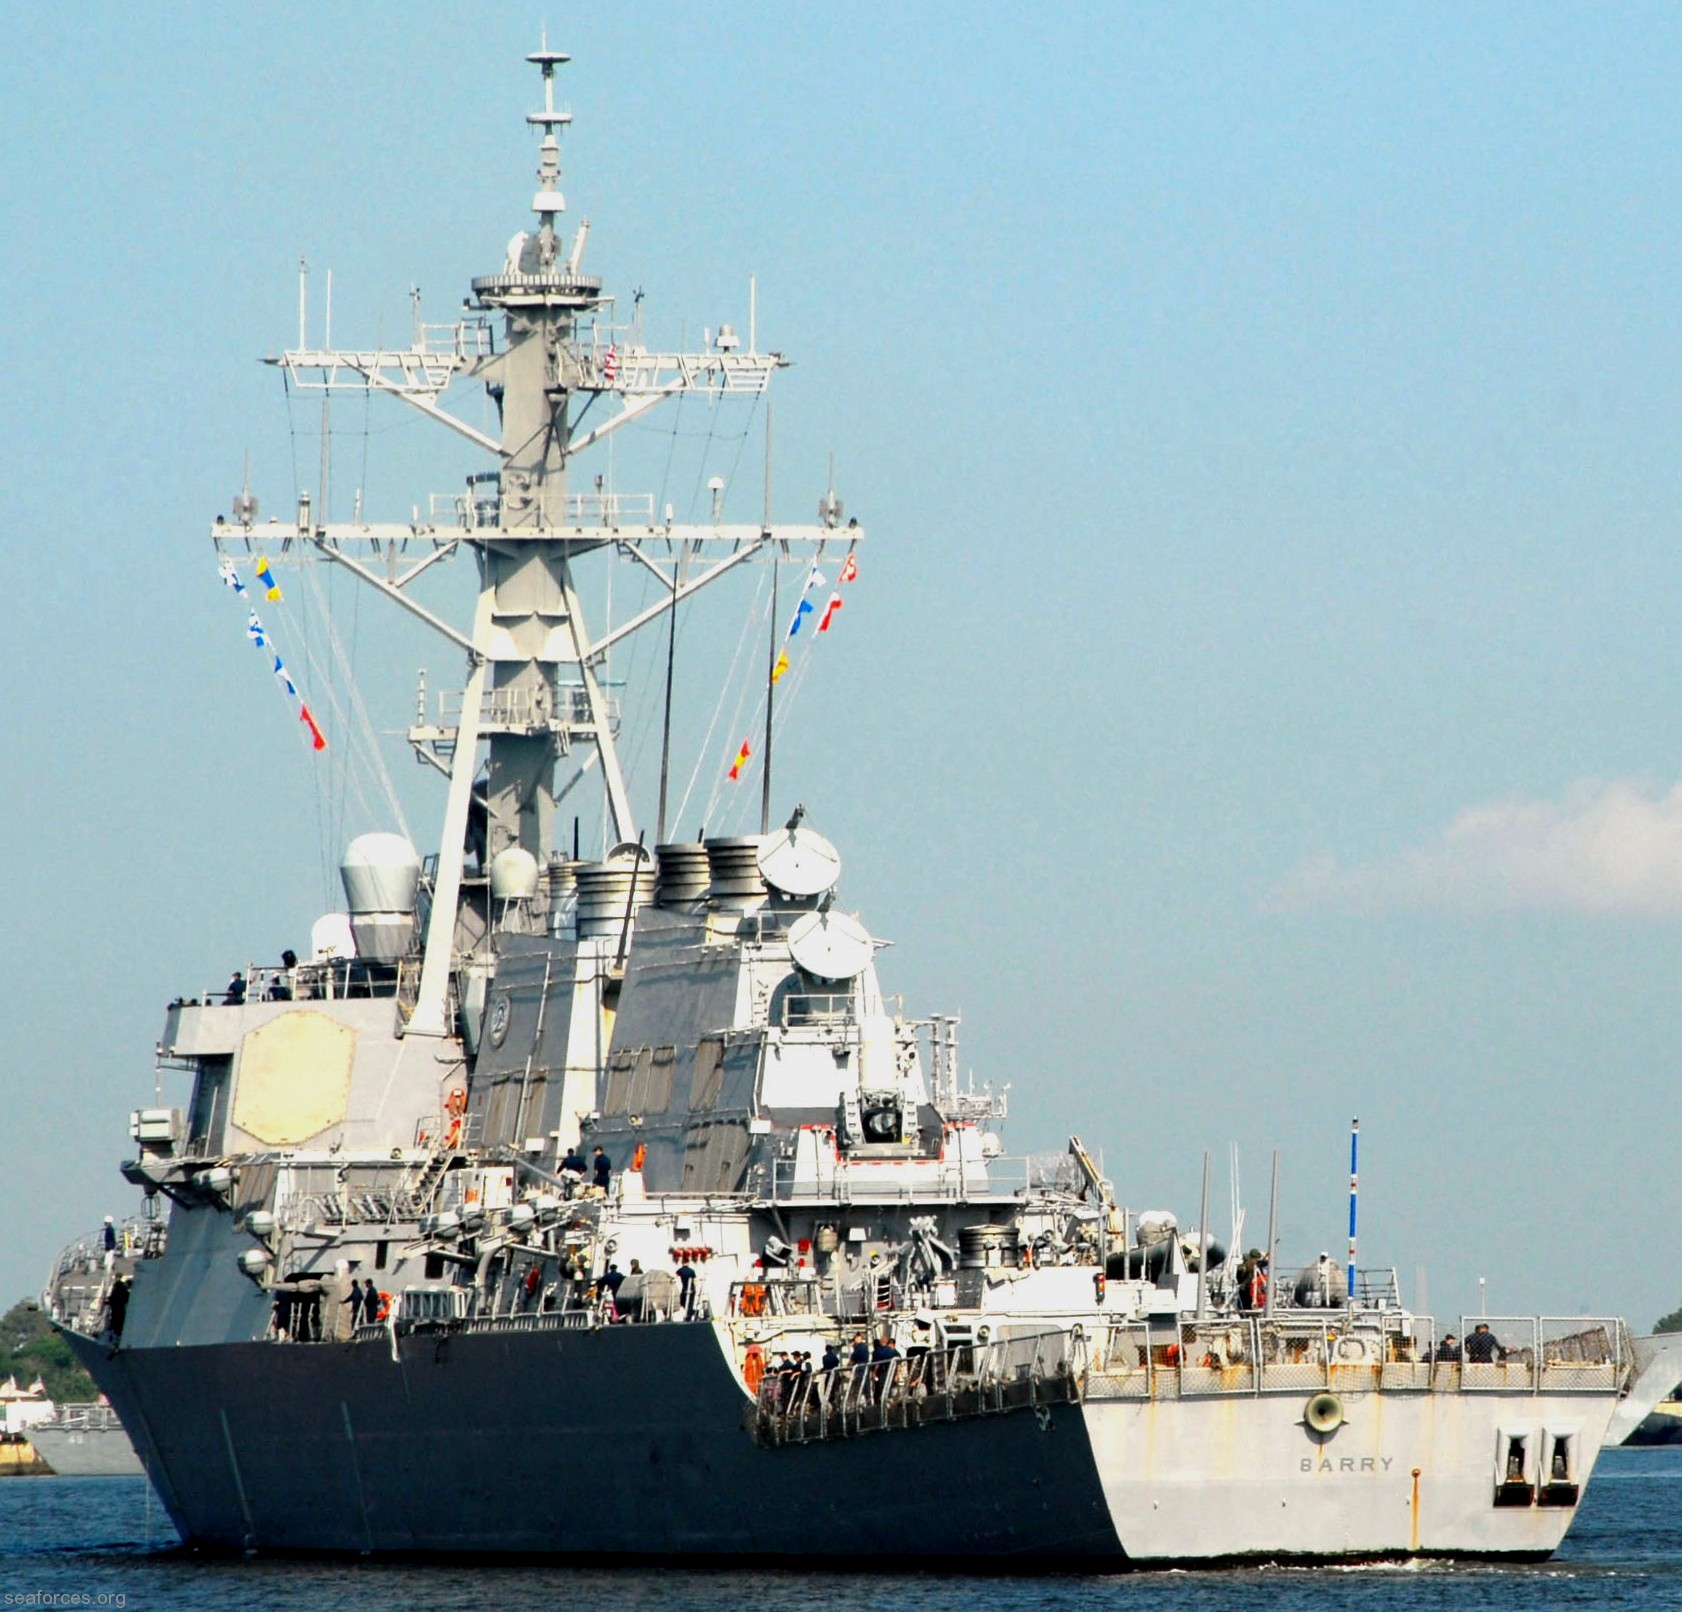 ddg-52 uss barry guided missile destroyer us navy 64 mayport florida